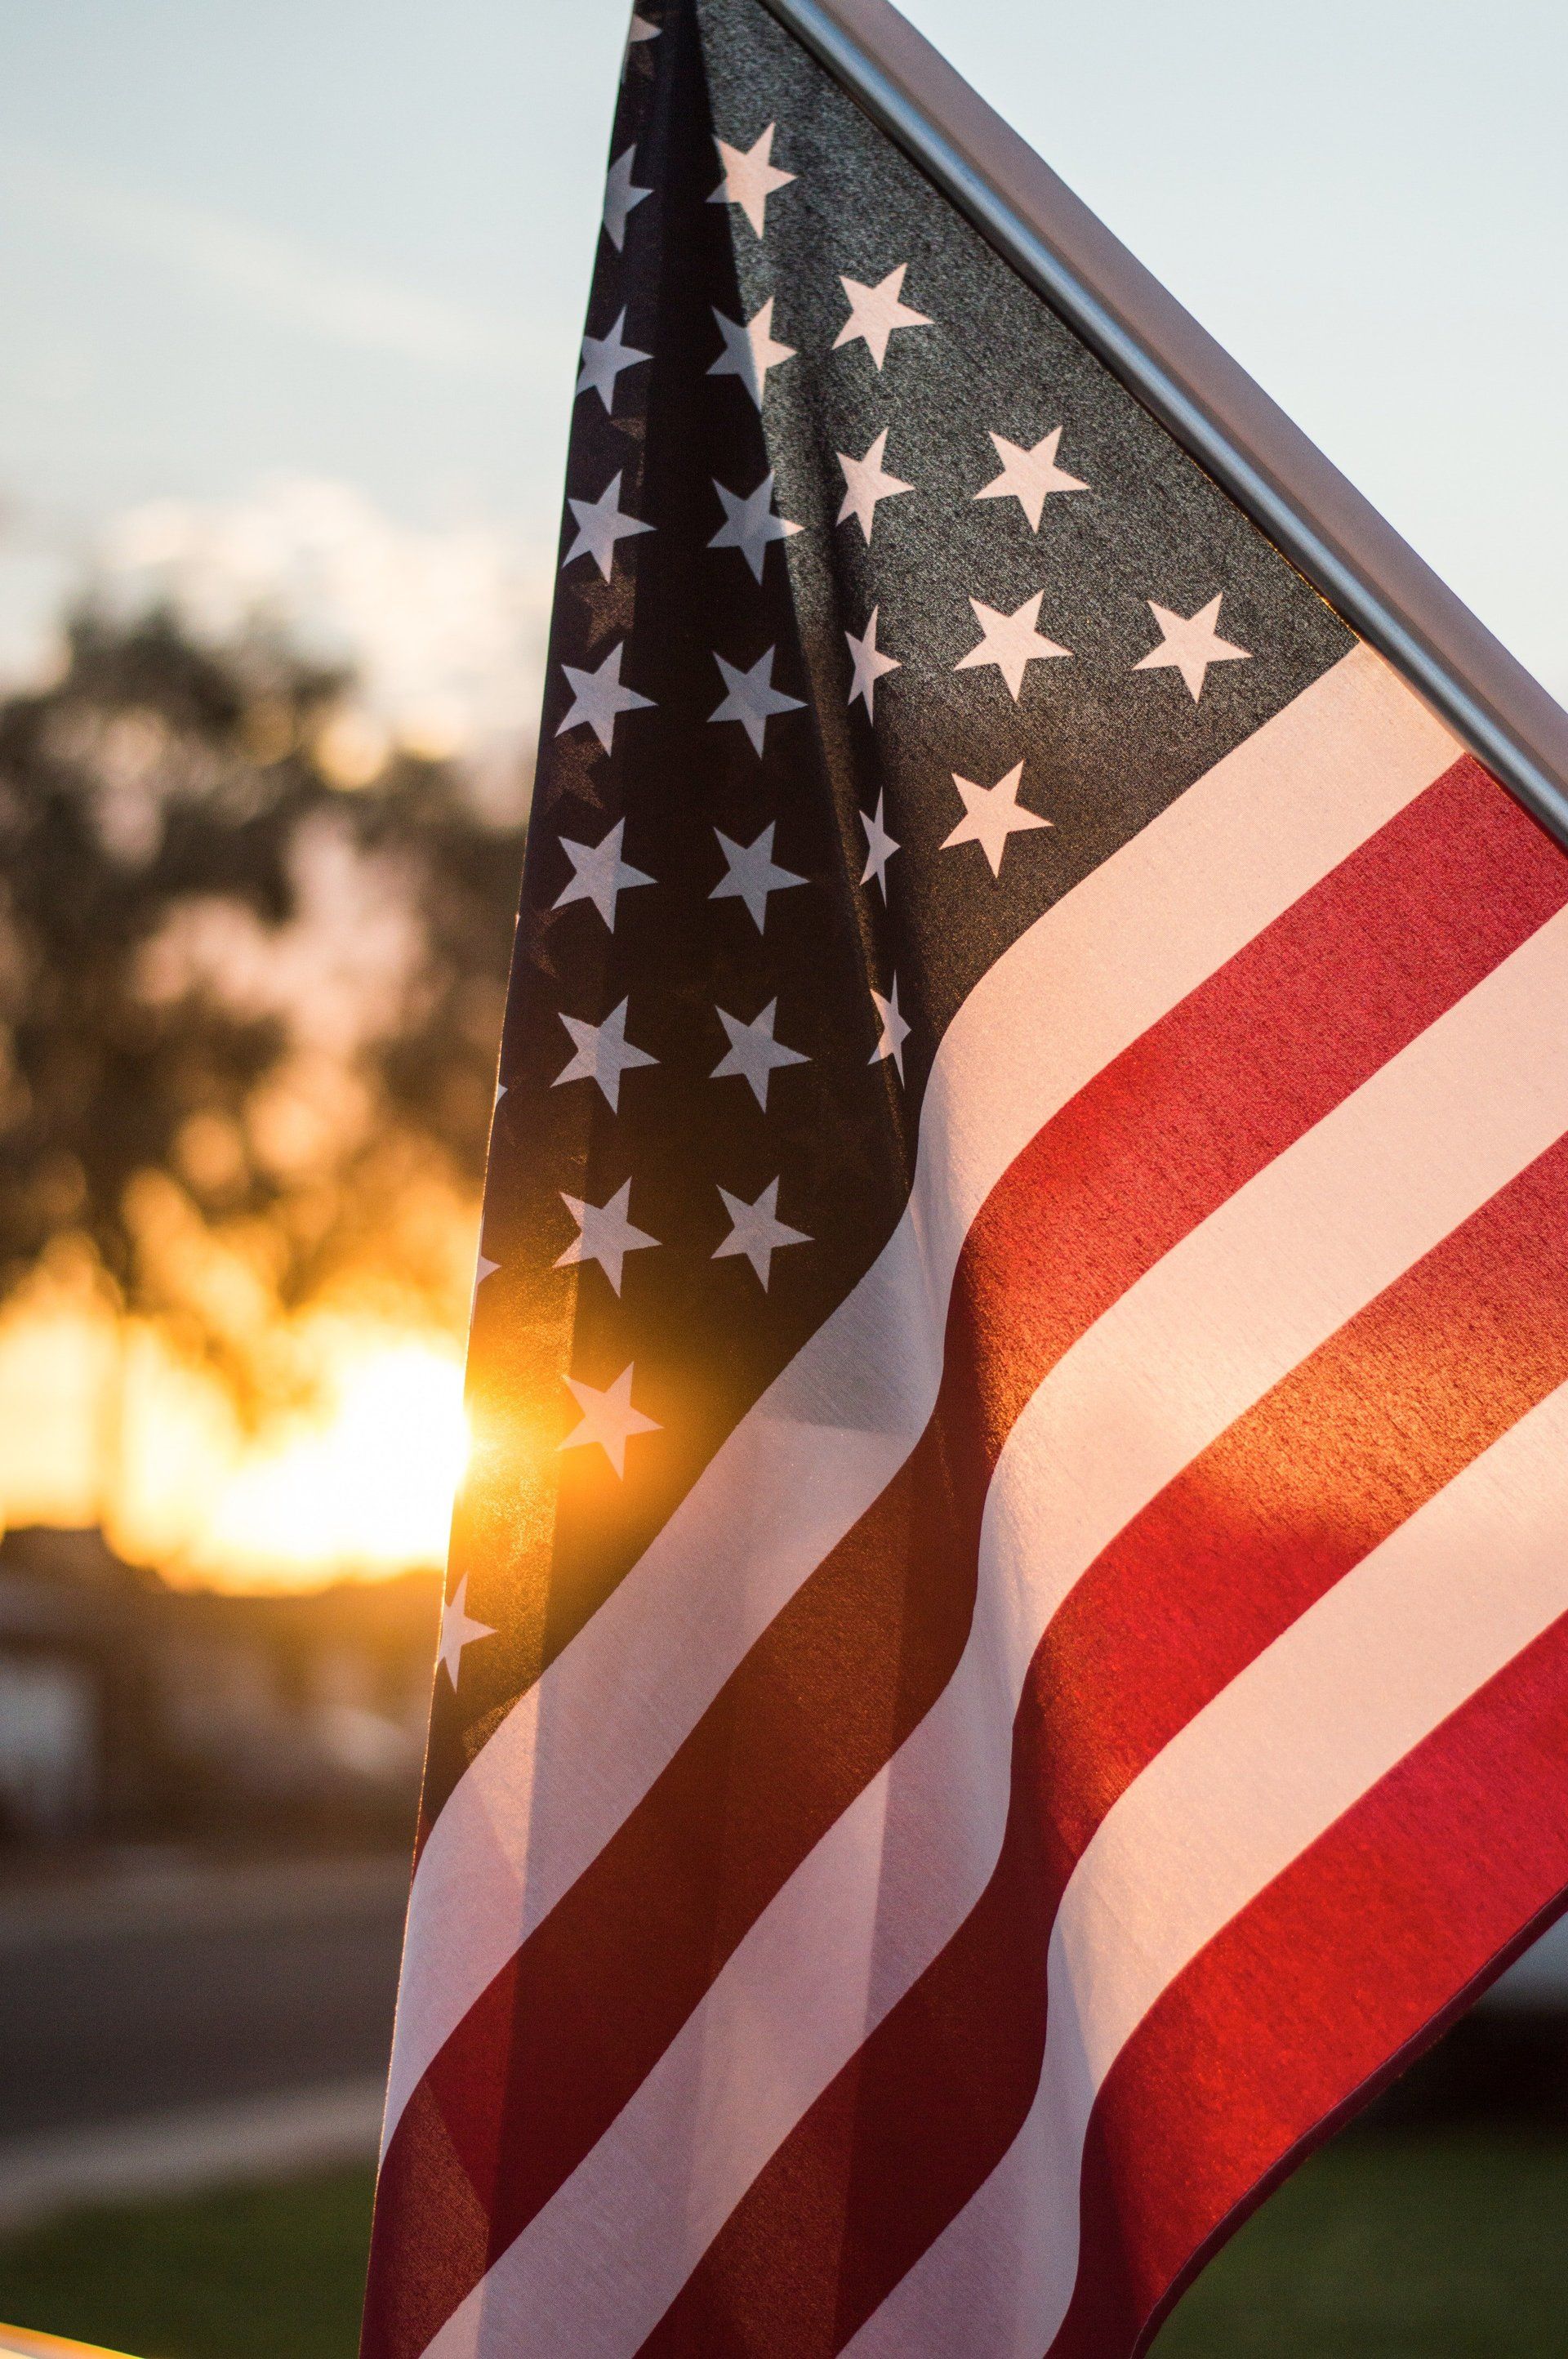 USA Flag at sunrise or sunset